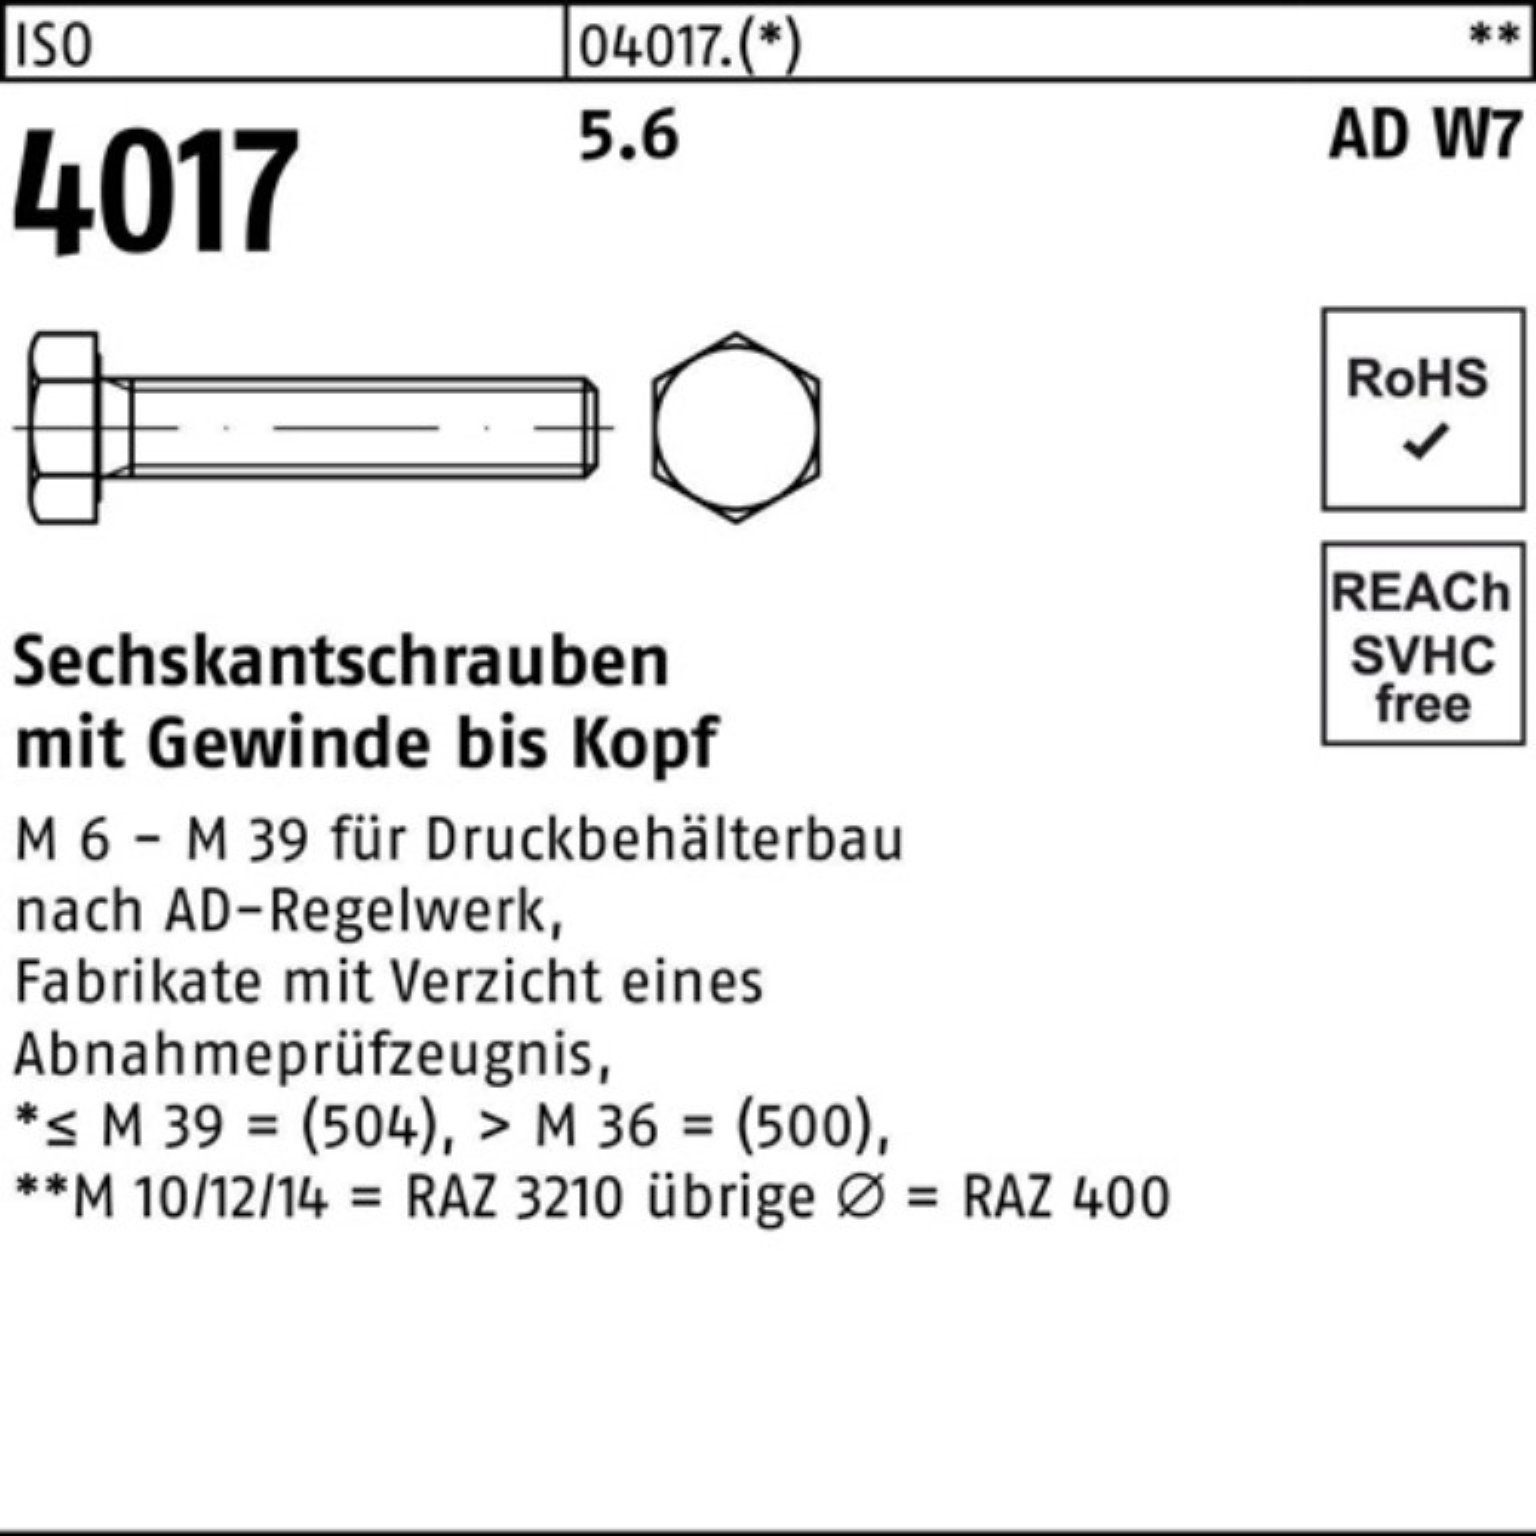 100er Sechskantschraube W7 AD M27x 4017 140 1 ISO VG Sechskantschraube Stück Bufab 5.6 I Pack